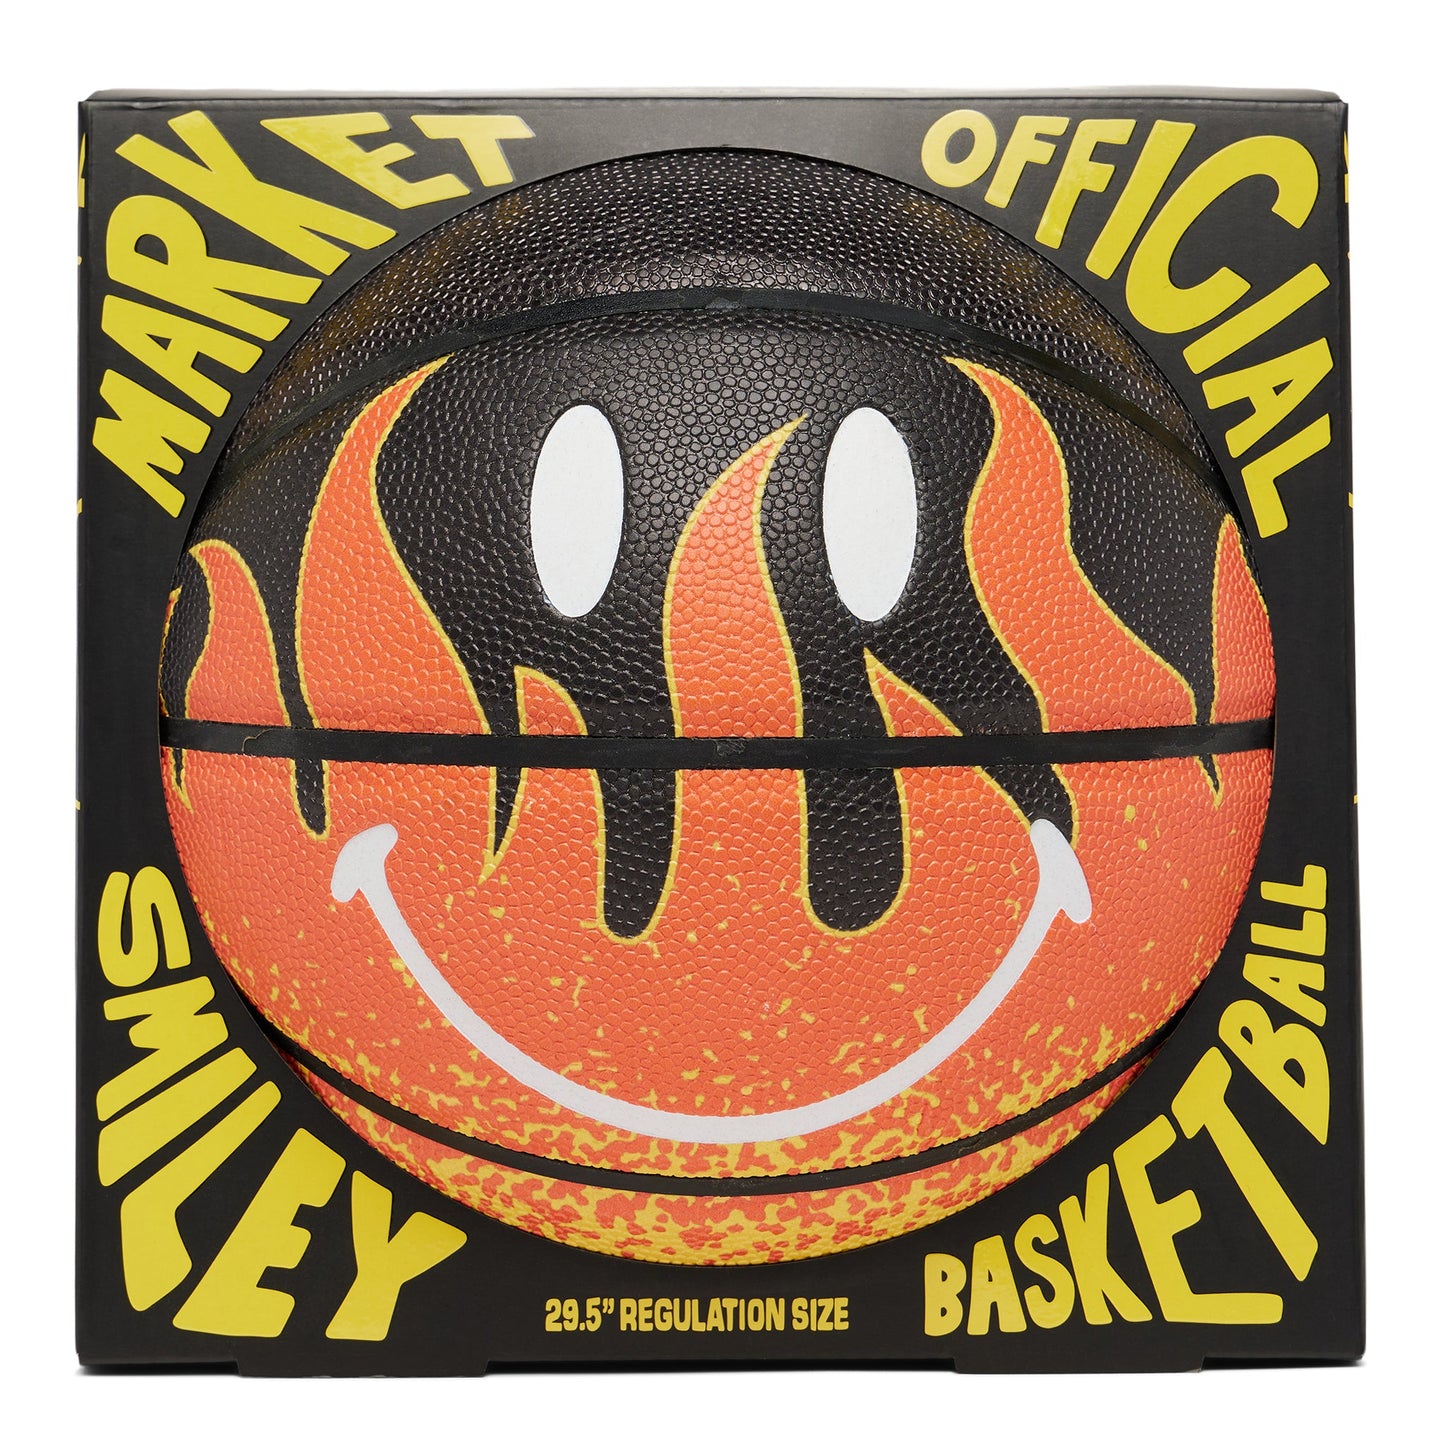 MARKET Smiley Flame Basketball